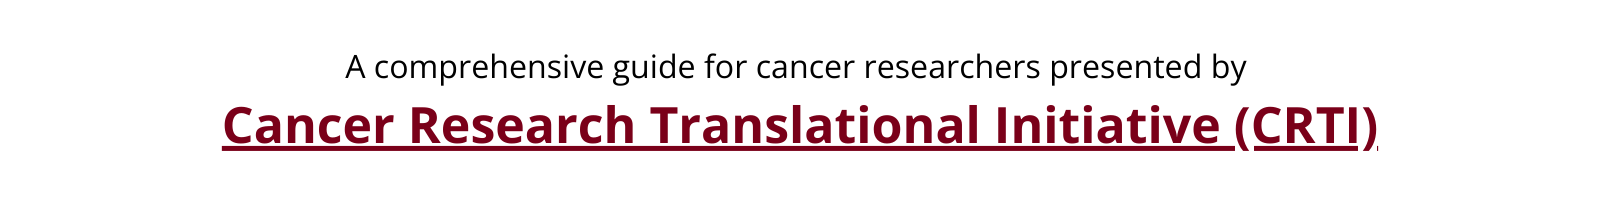 banner for translational resources